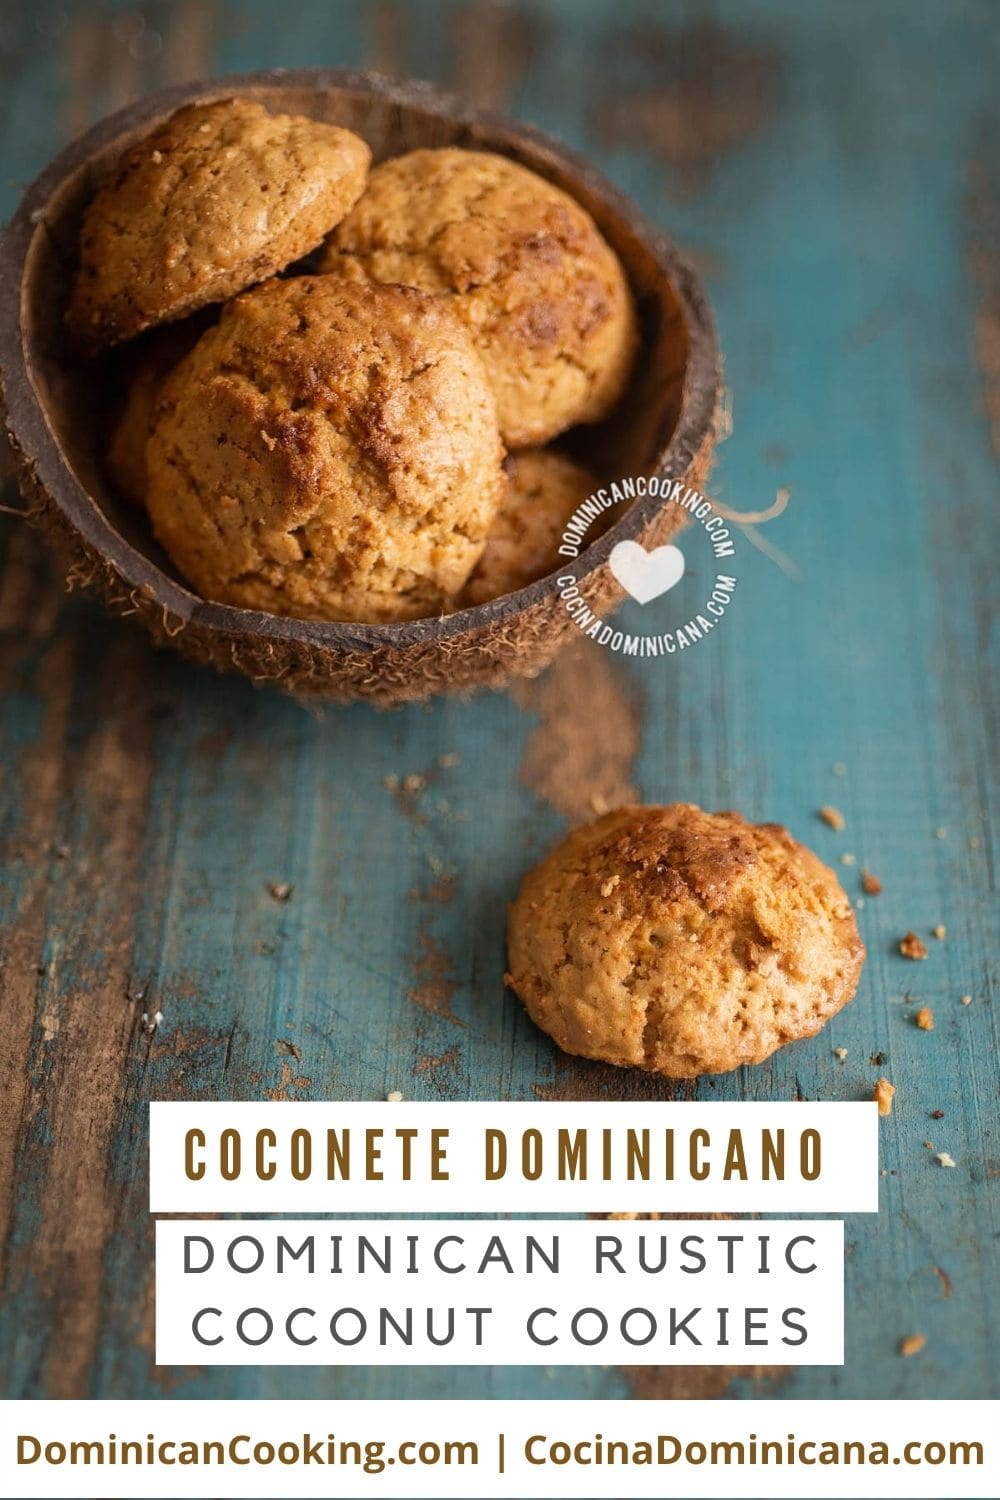 Coconete dominicano (rustic coconut cookies) recipe.